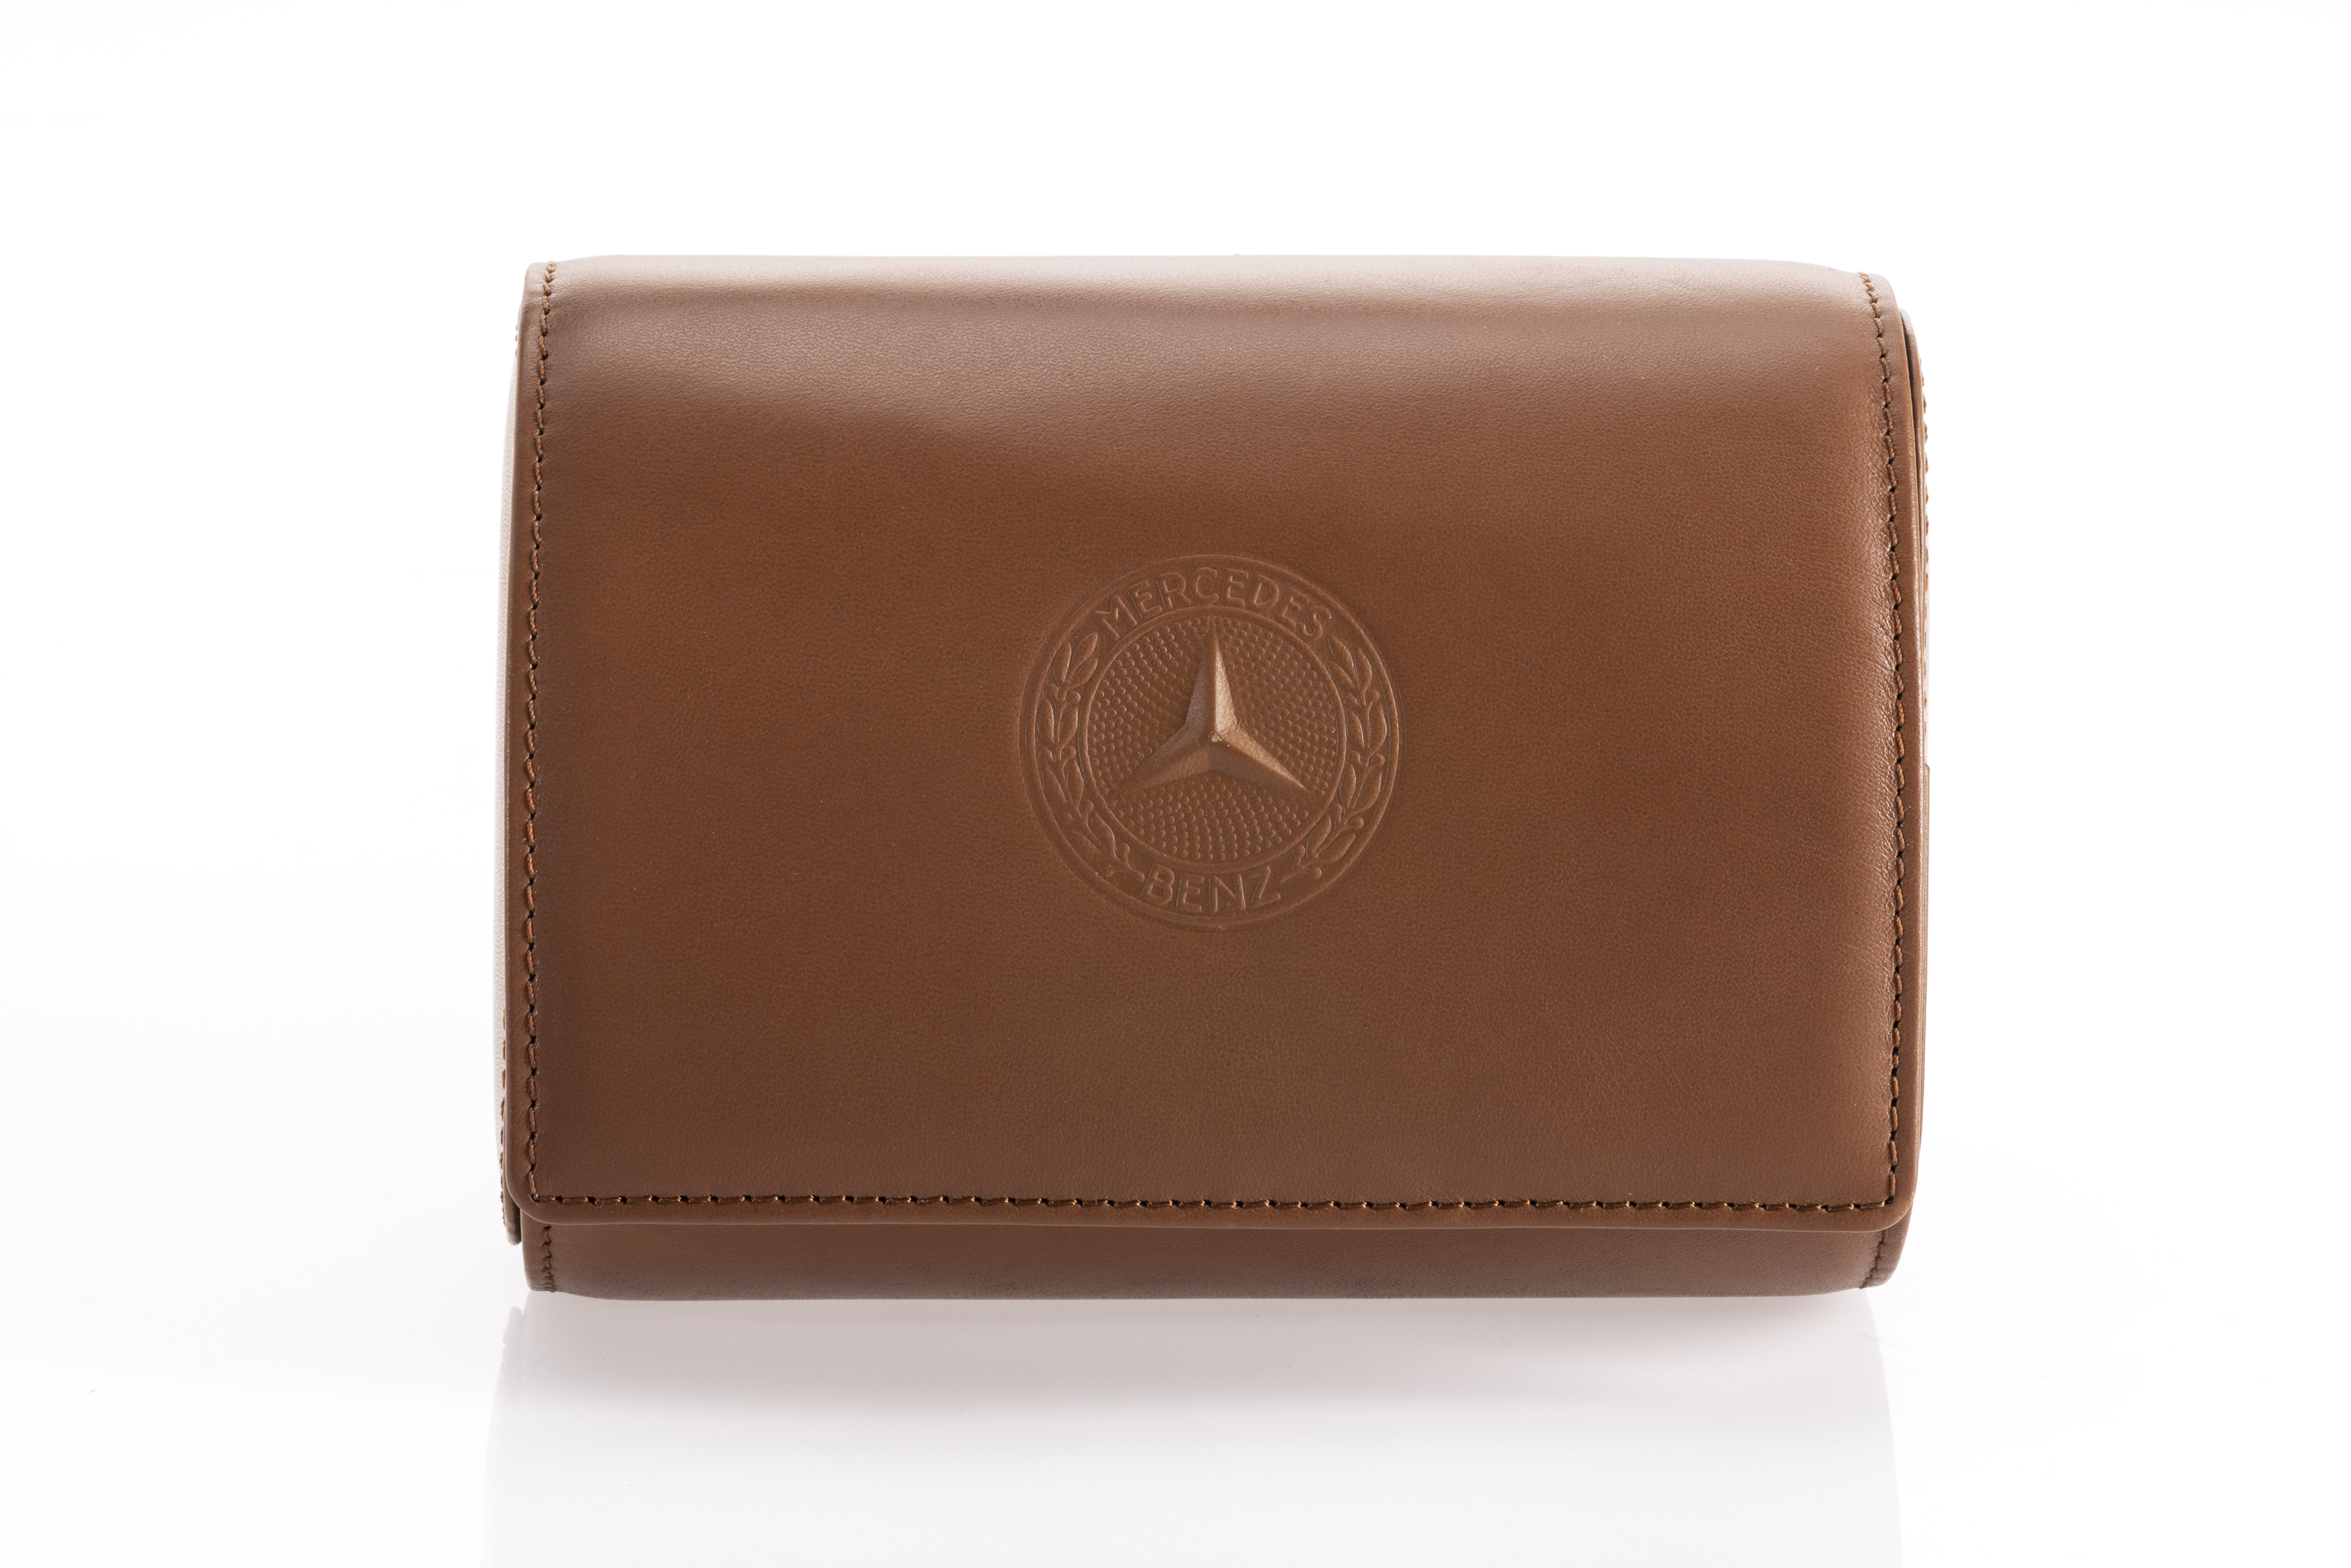 Mercedes-Benz Leather Bag Classic - B66057003